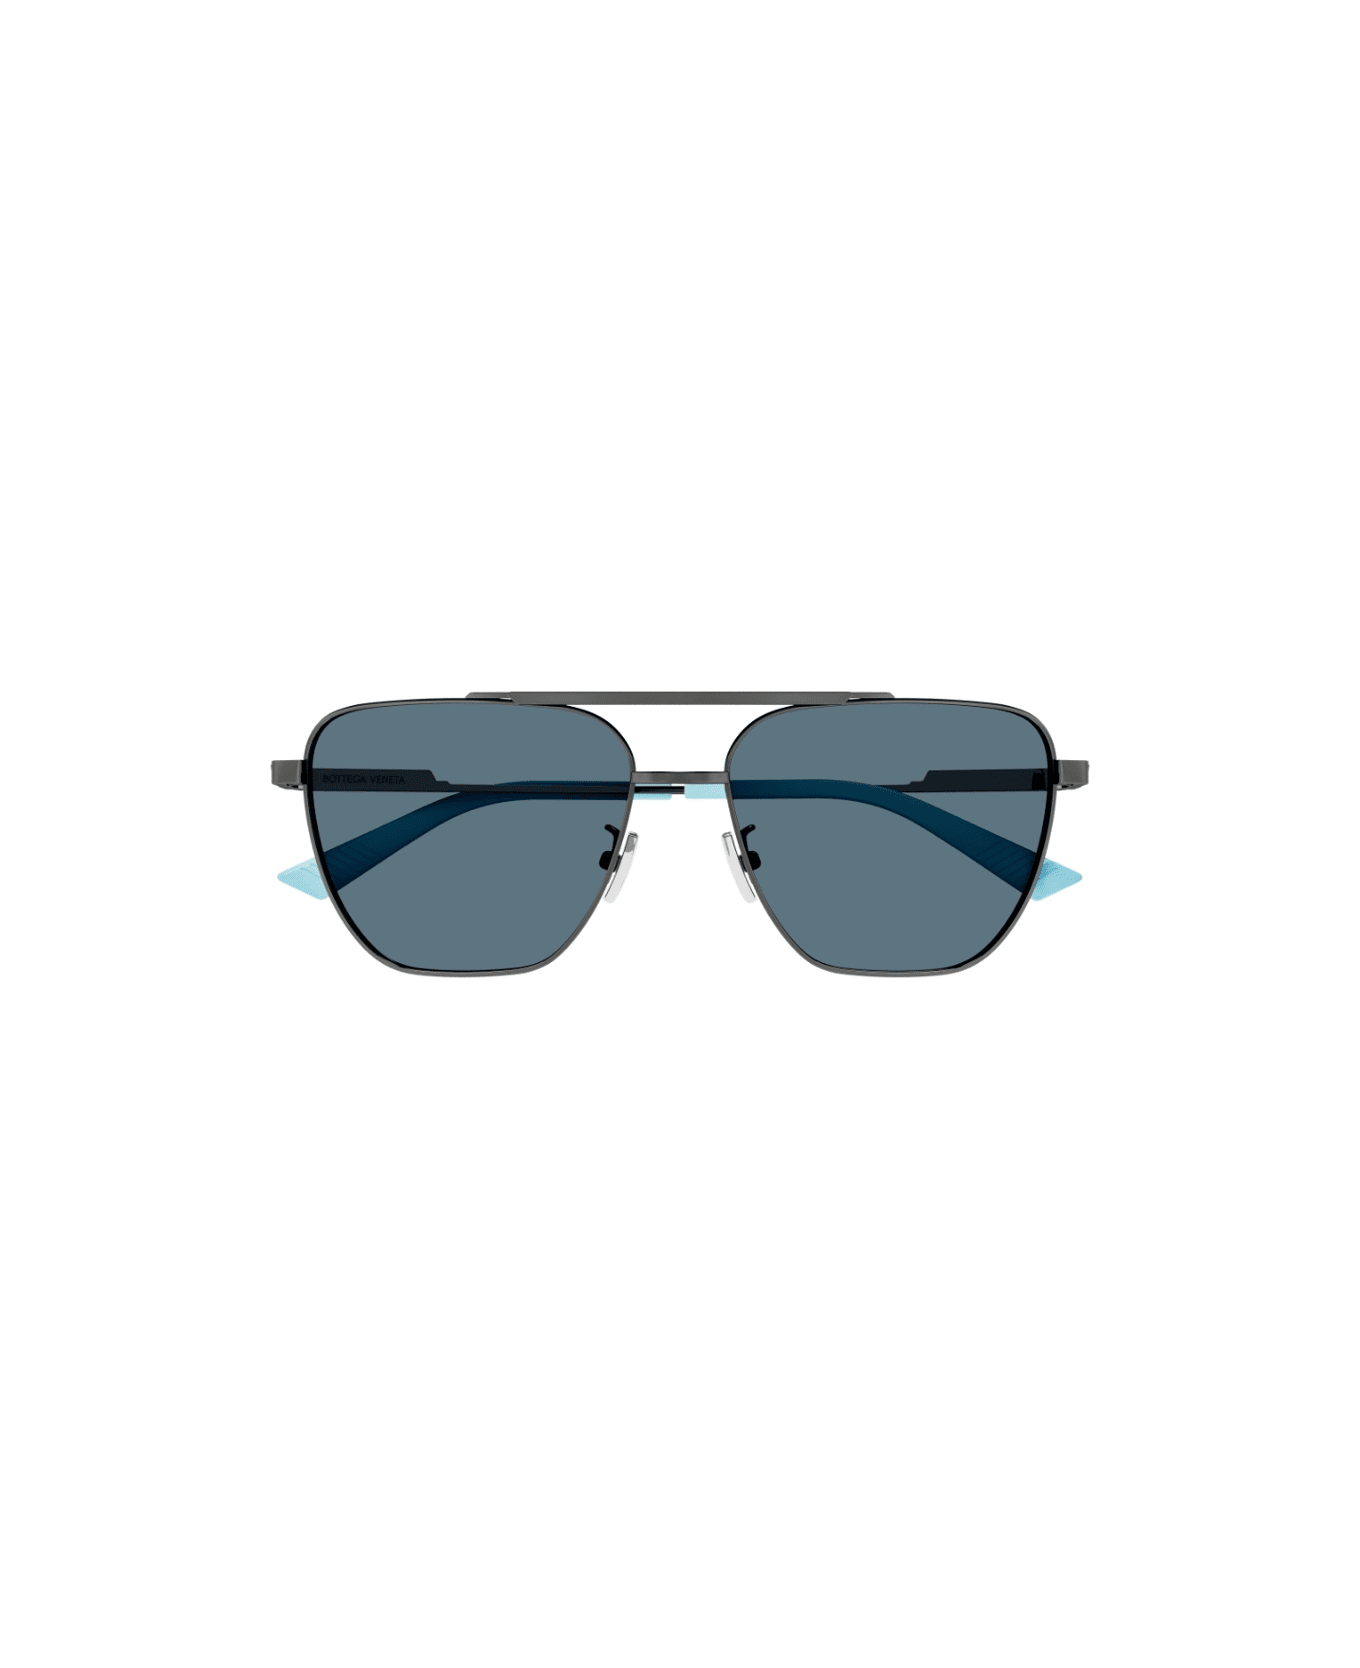 Bottega Veneta Eyewear BV1236s 004 Sunglasses - Canna di Fucile